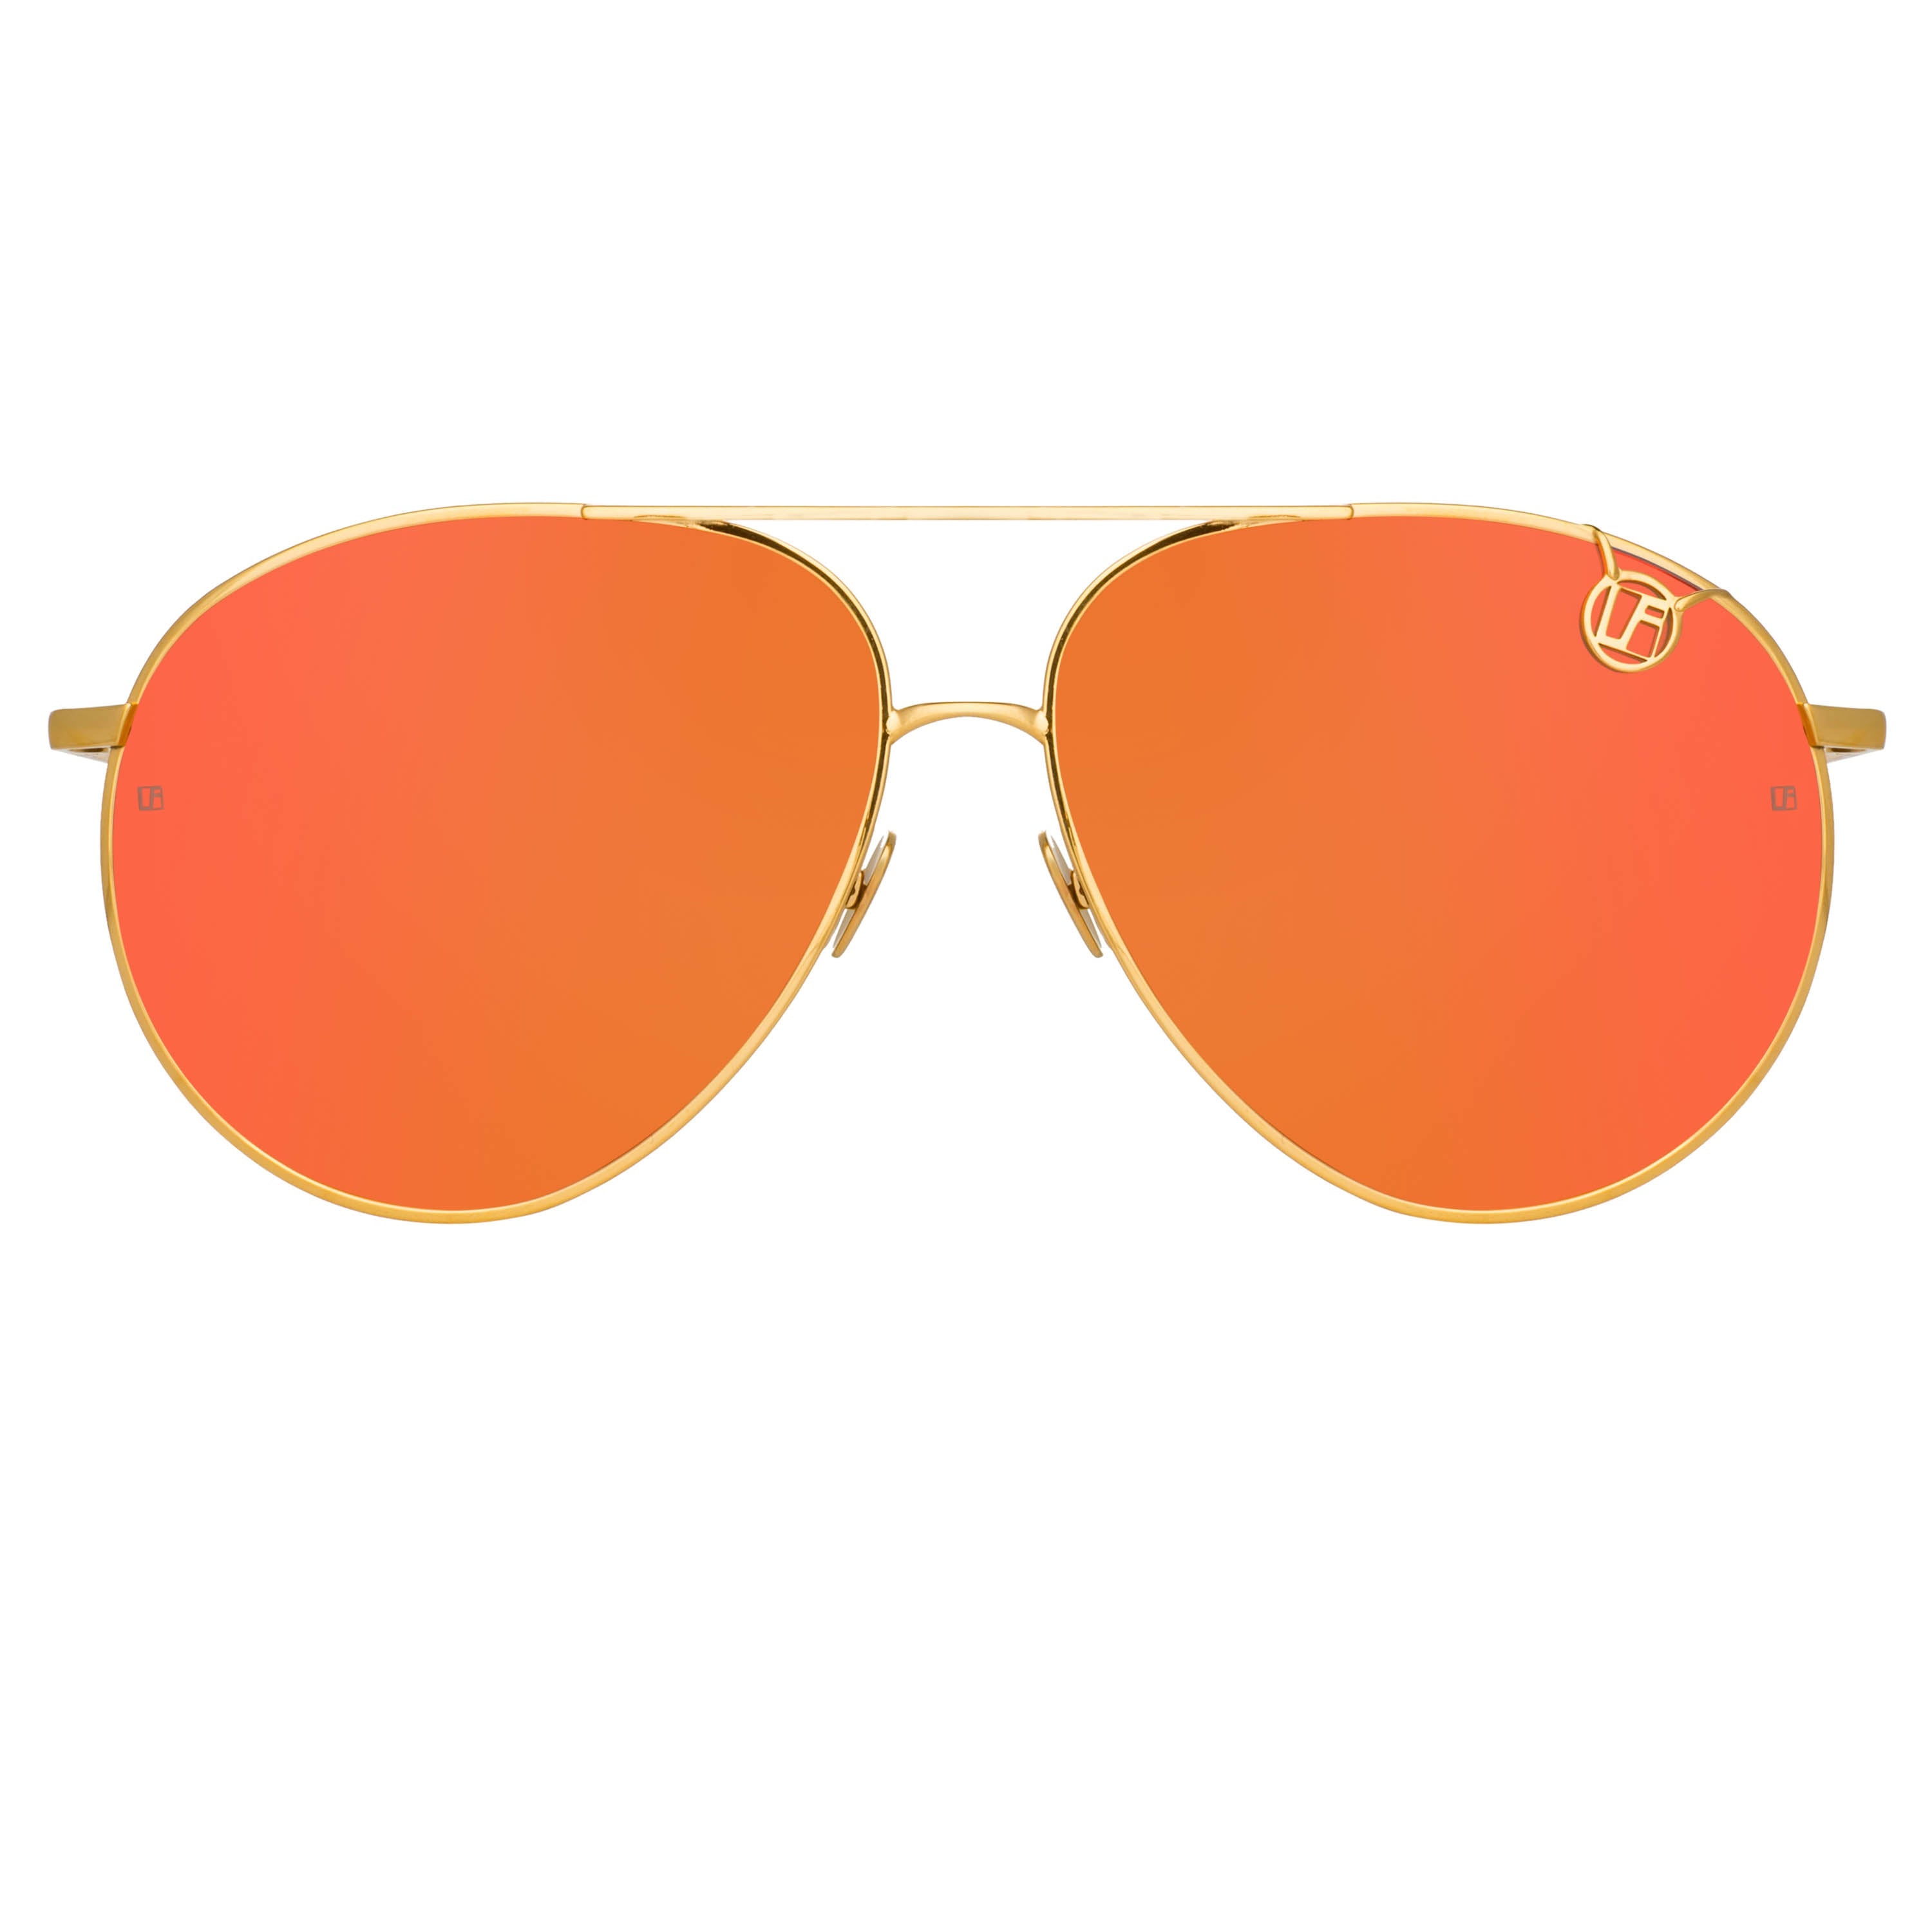 Joni Aviator Sunglasses in White Gold and Rose Gold Lenses by LINDA FARROW  – LINDA FARROW (INT'L)